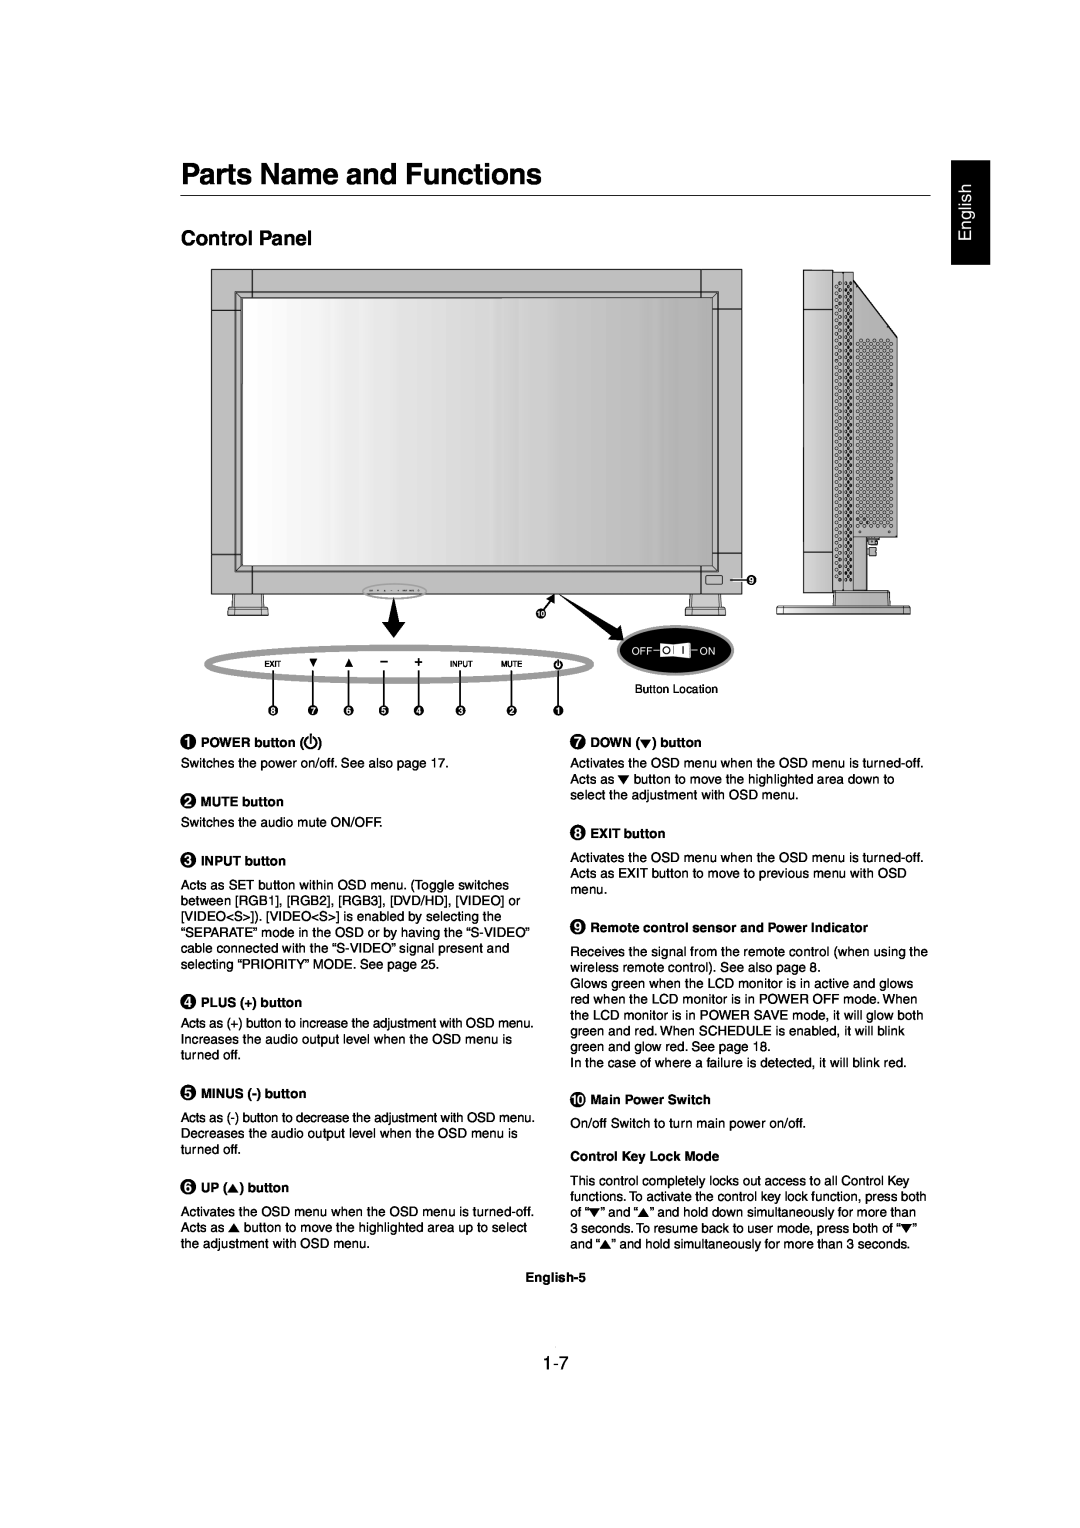 Mitsubishi Electronics MDT321S user manual Parts Name and Functions, Control Panel, English 